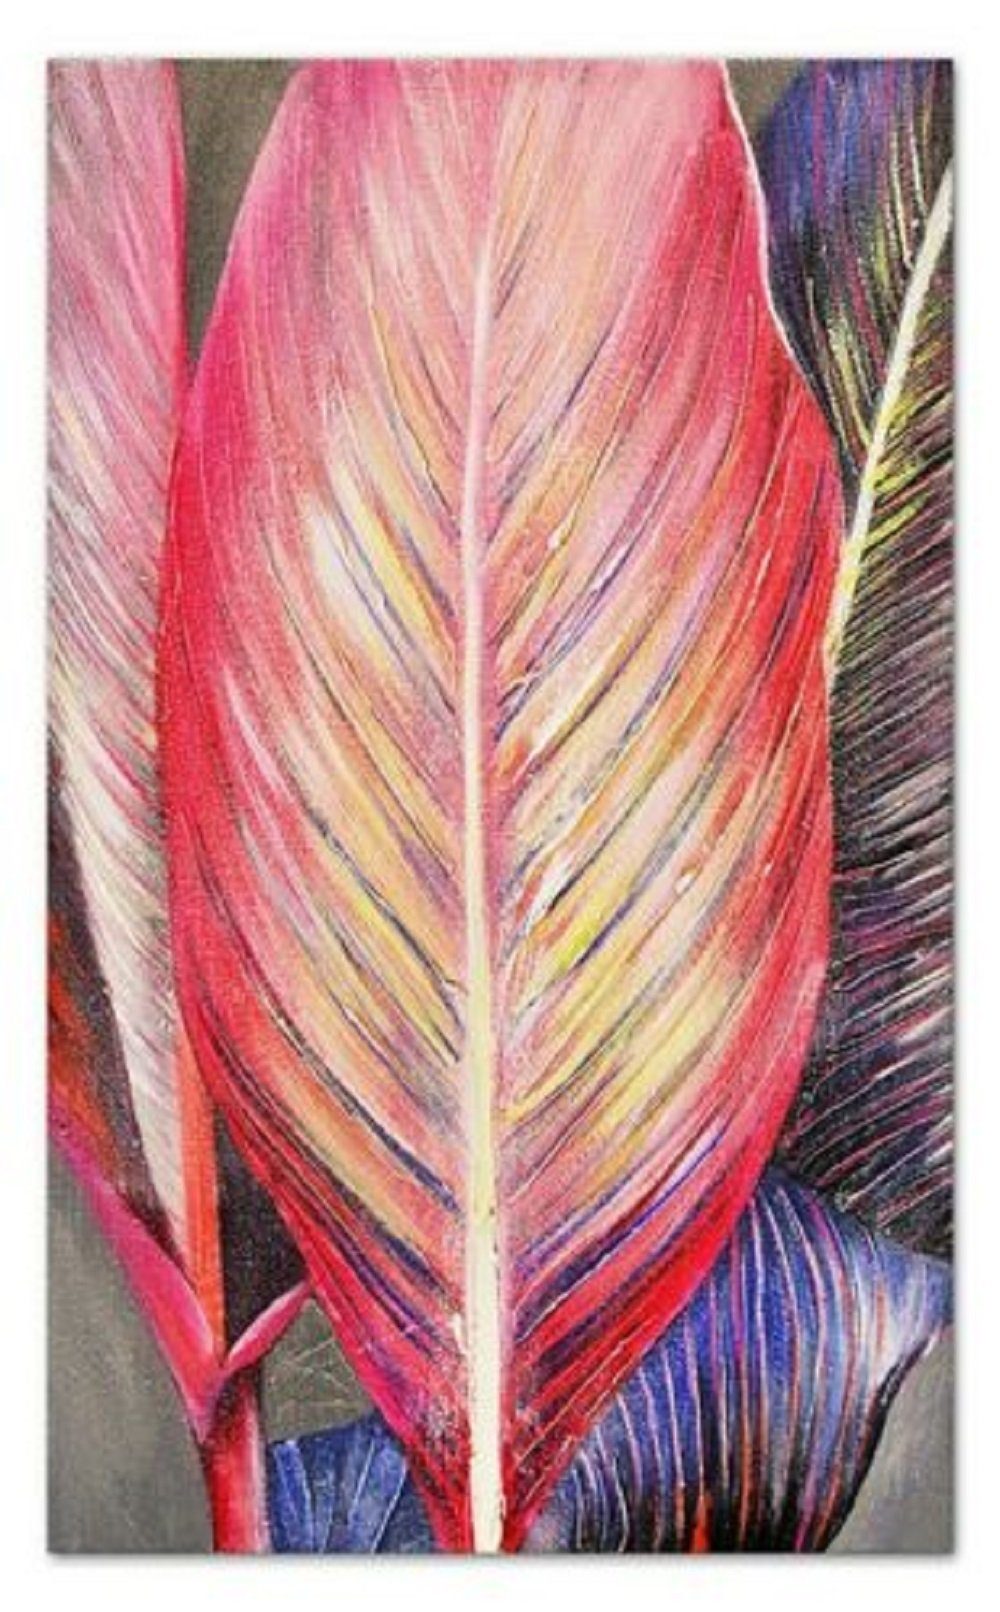 JVmoebel Ölbild Farbenfrohes Bild Gemälde Handarbeit Abstrakt Ölbild Abstrakte G100122, Abstrakt